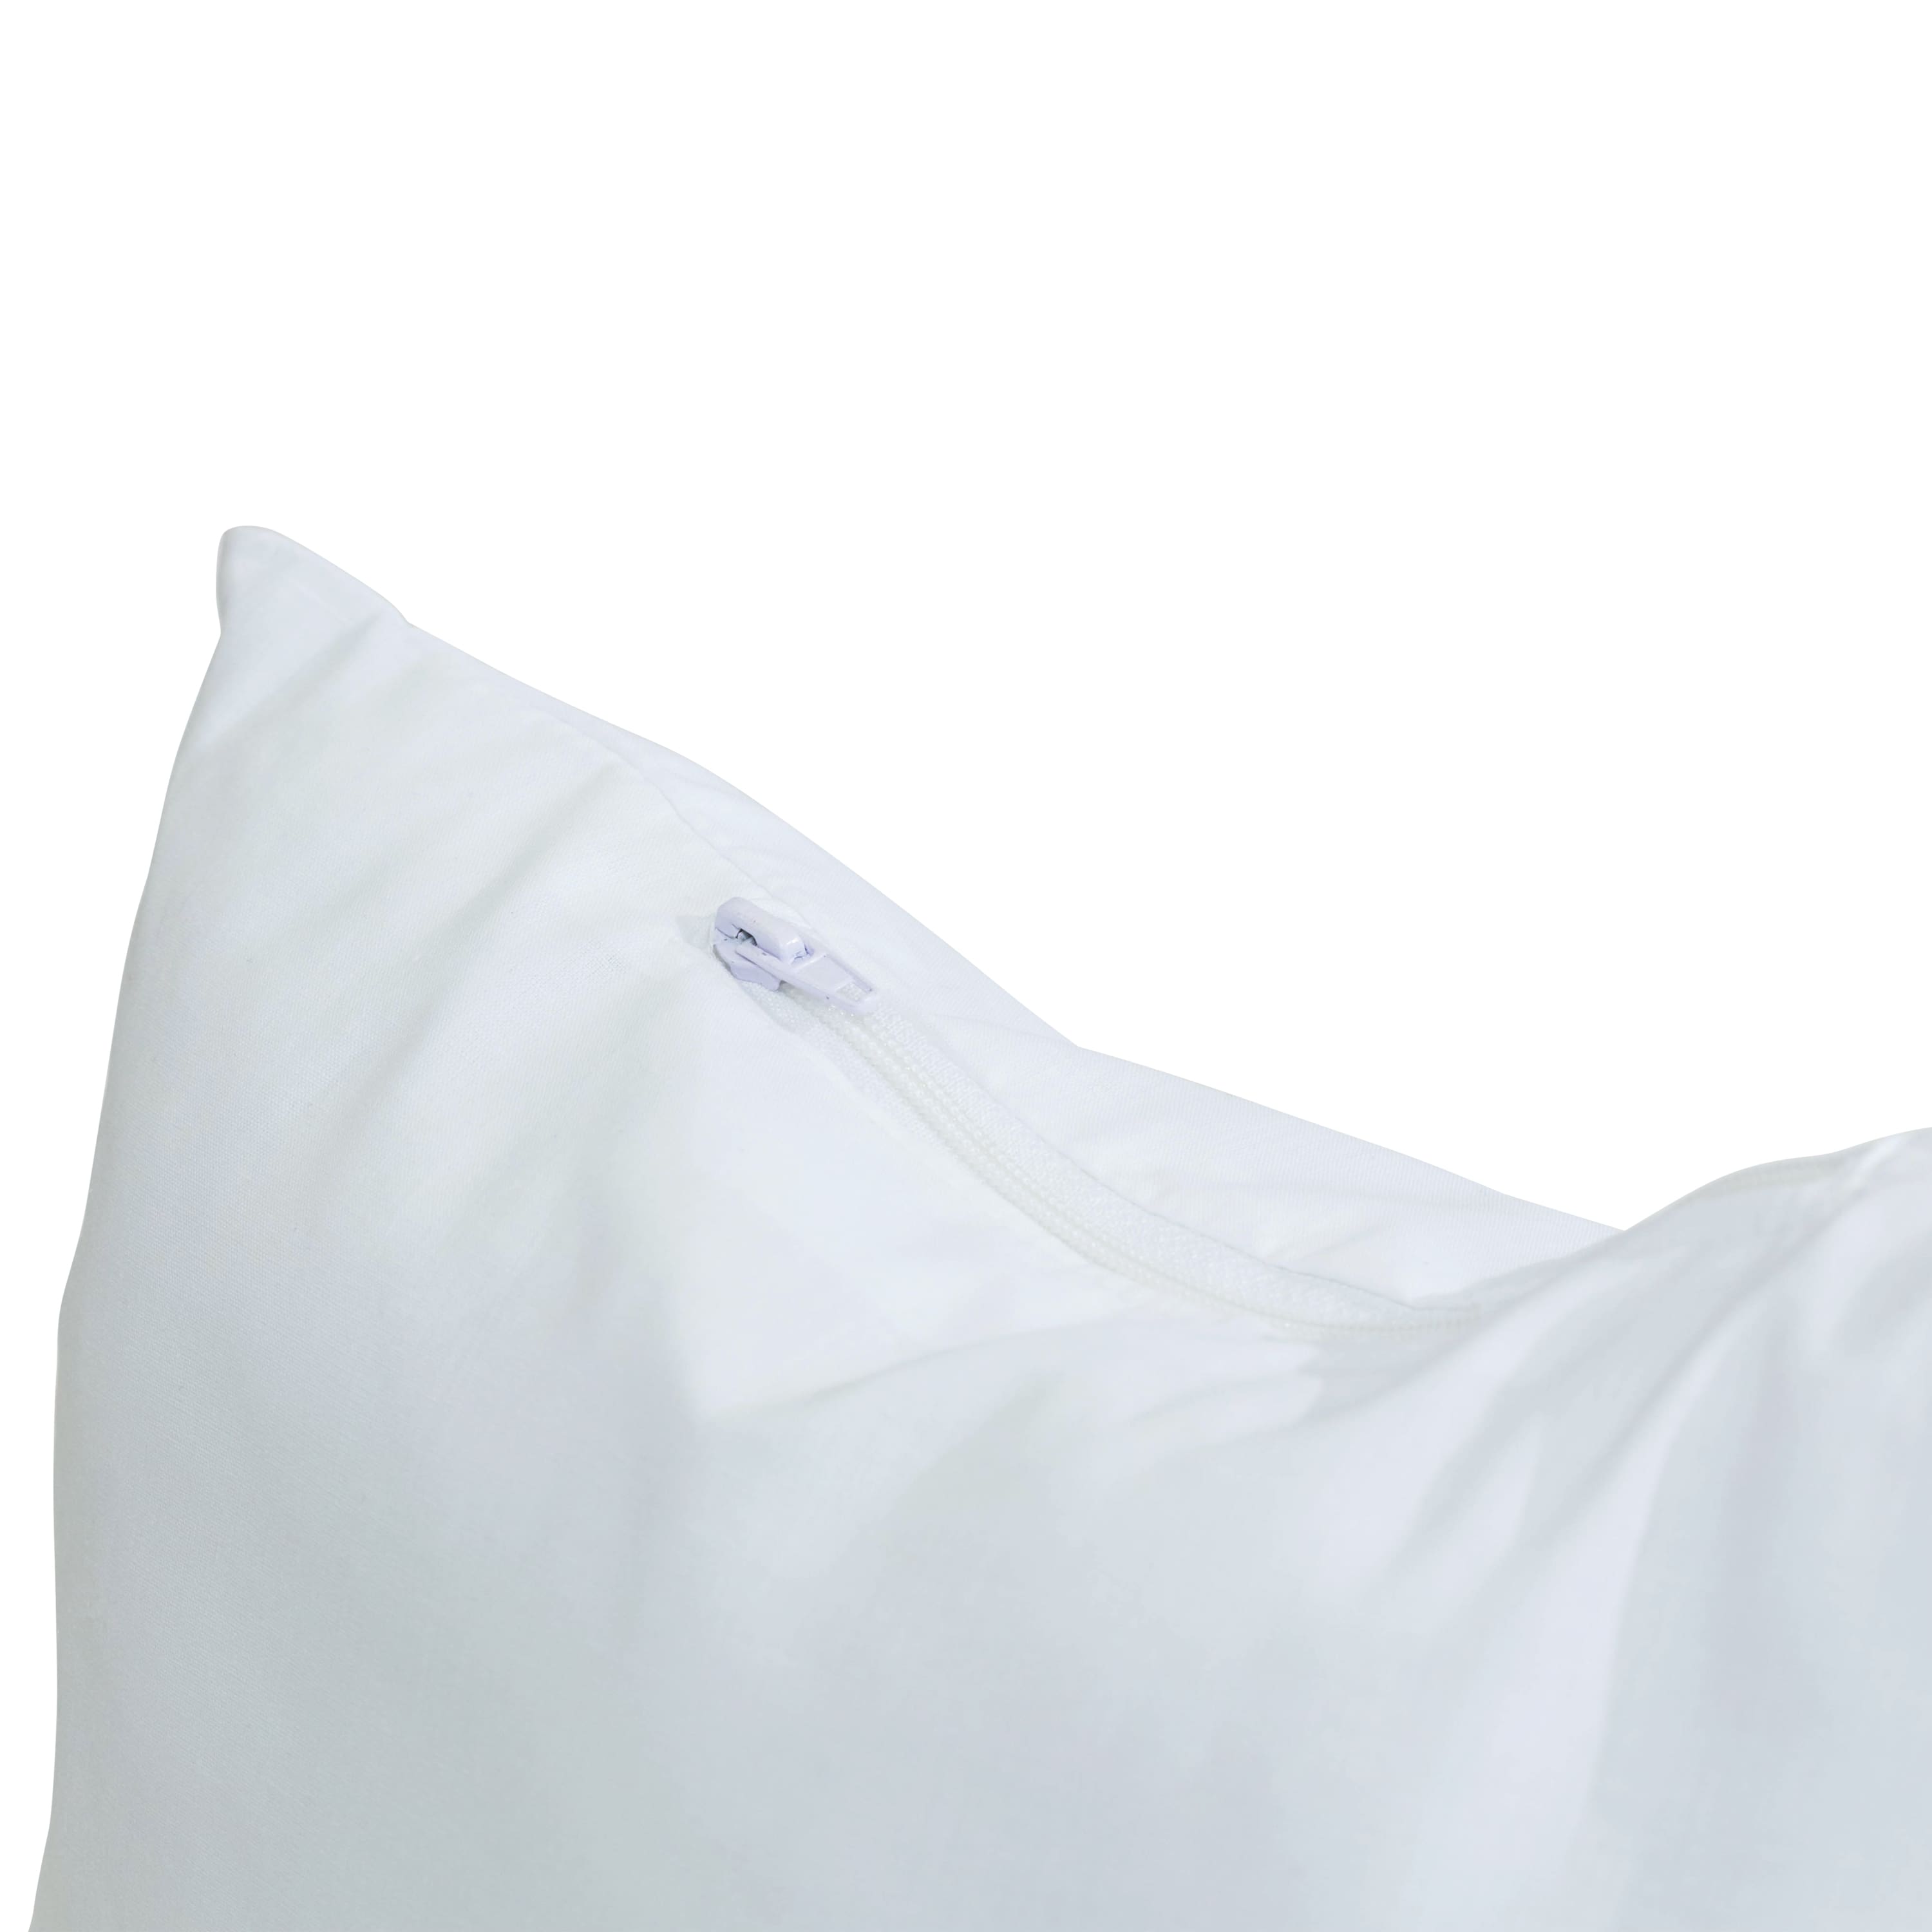 22 x 22 Poly-Fil Premier Oversized Pillow Insert | Fairfield #JP22